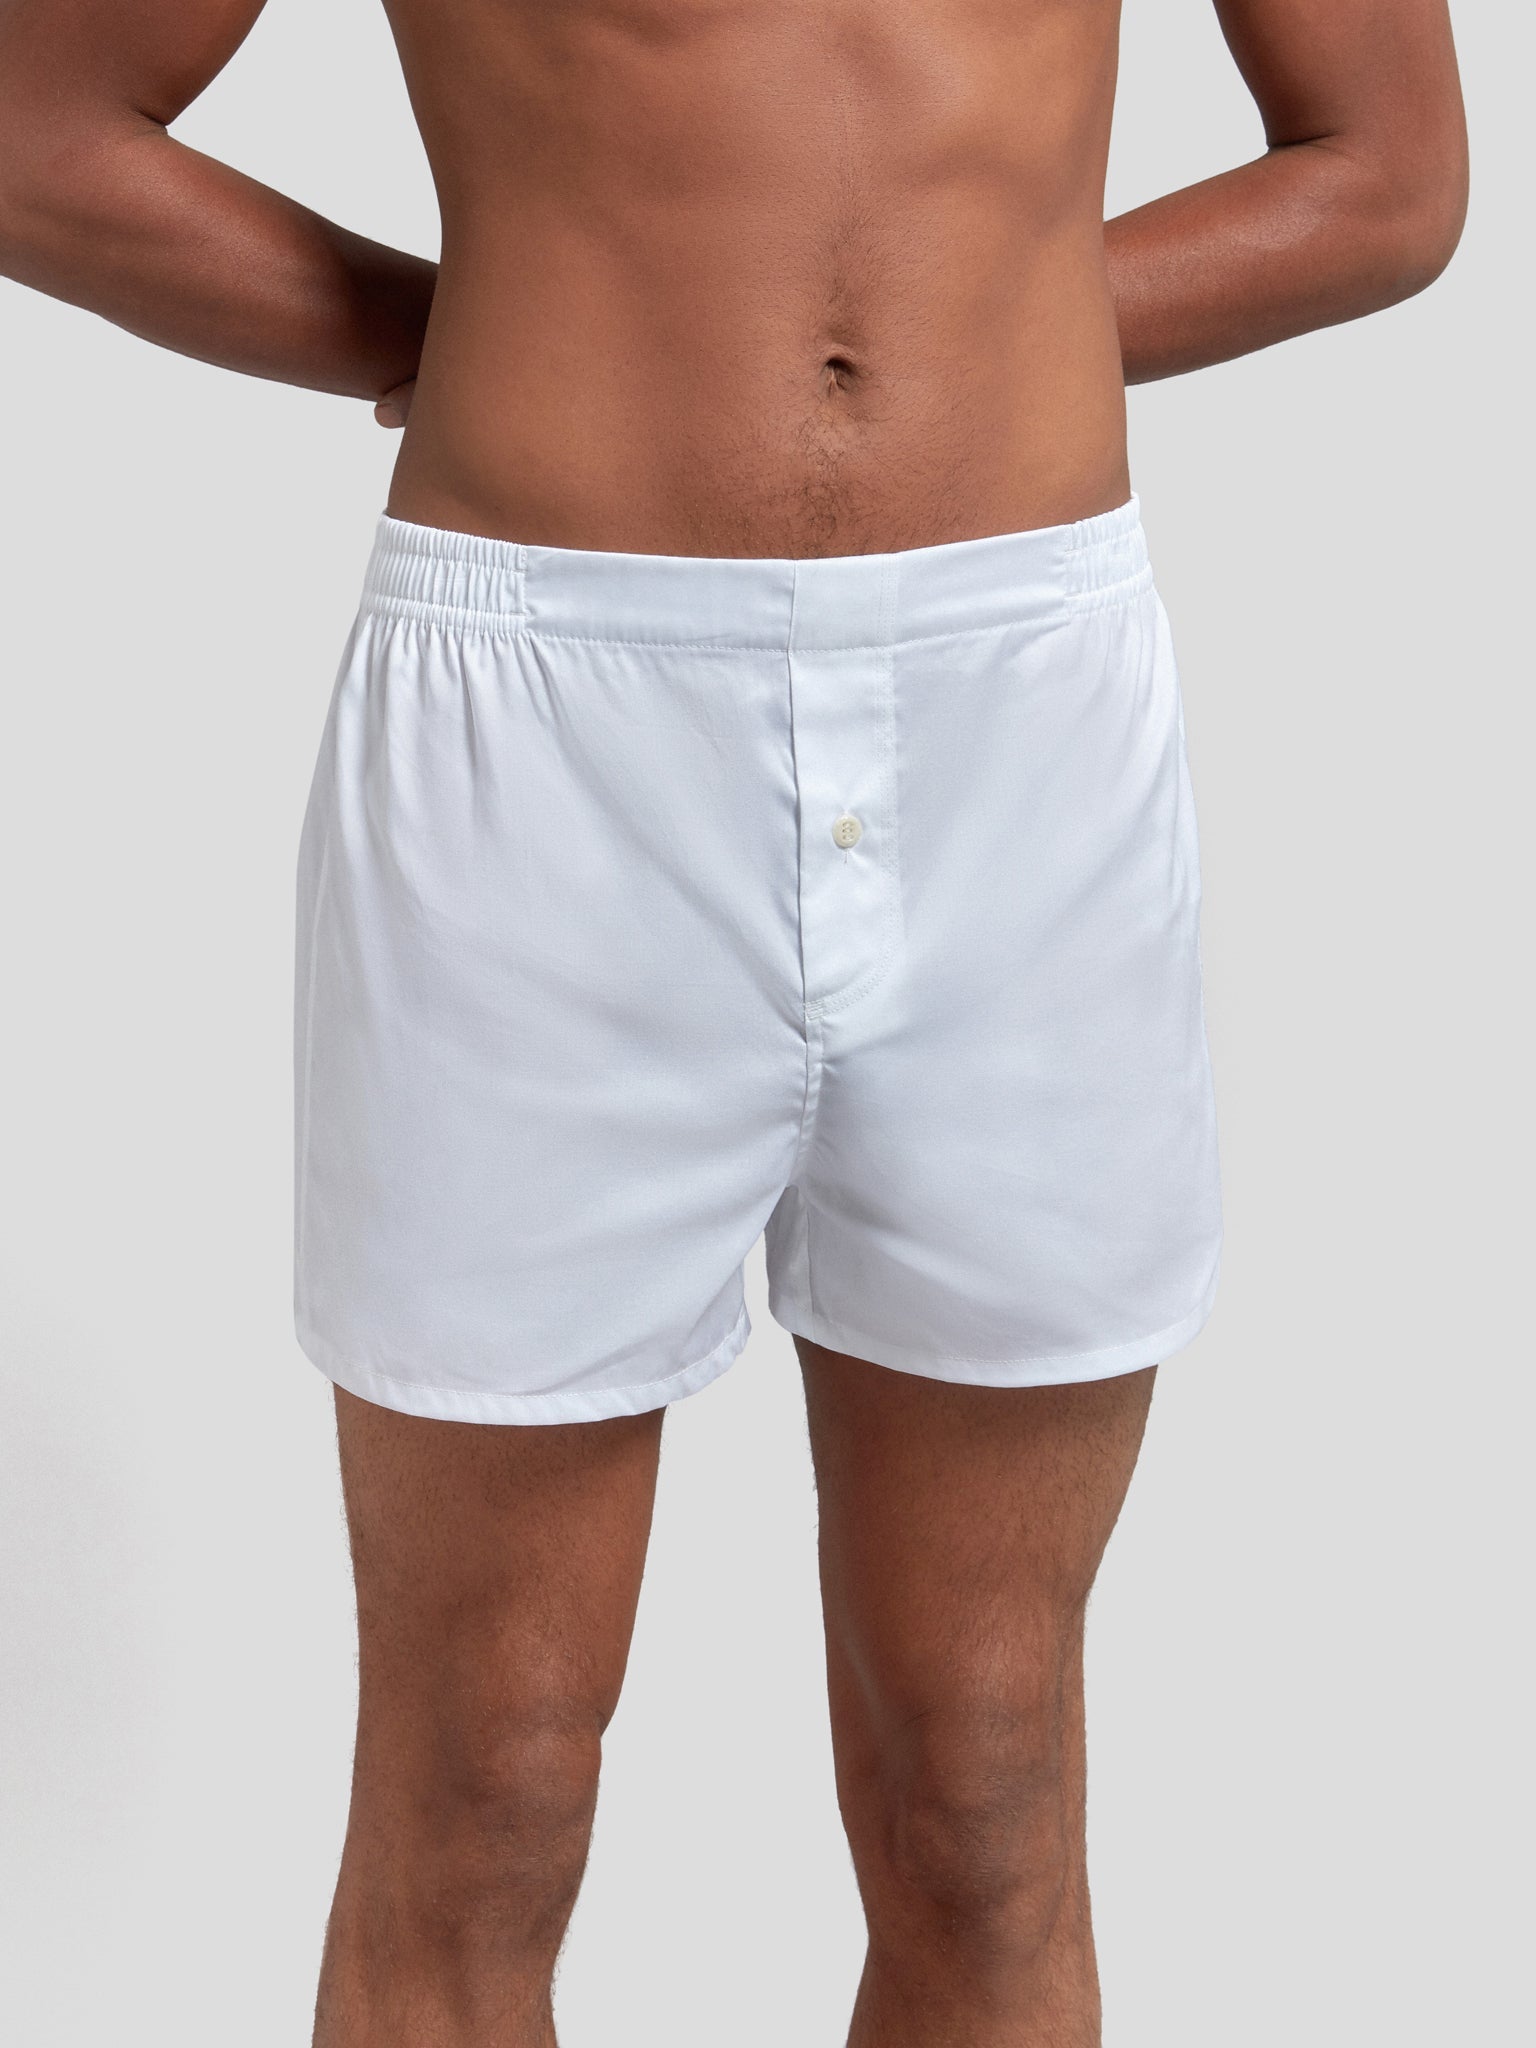 Boxer Short - Classic White Cotton